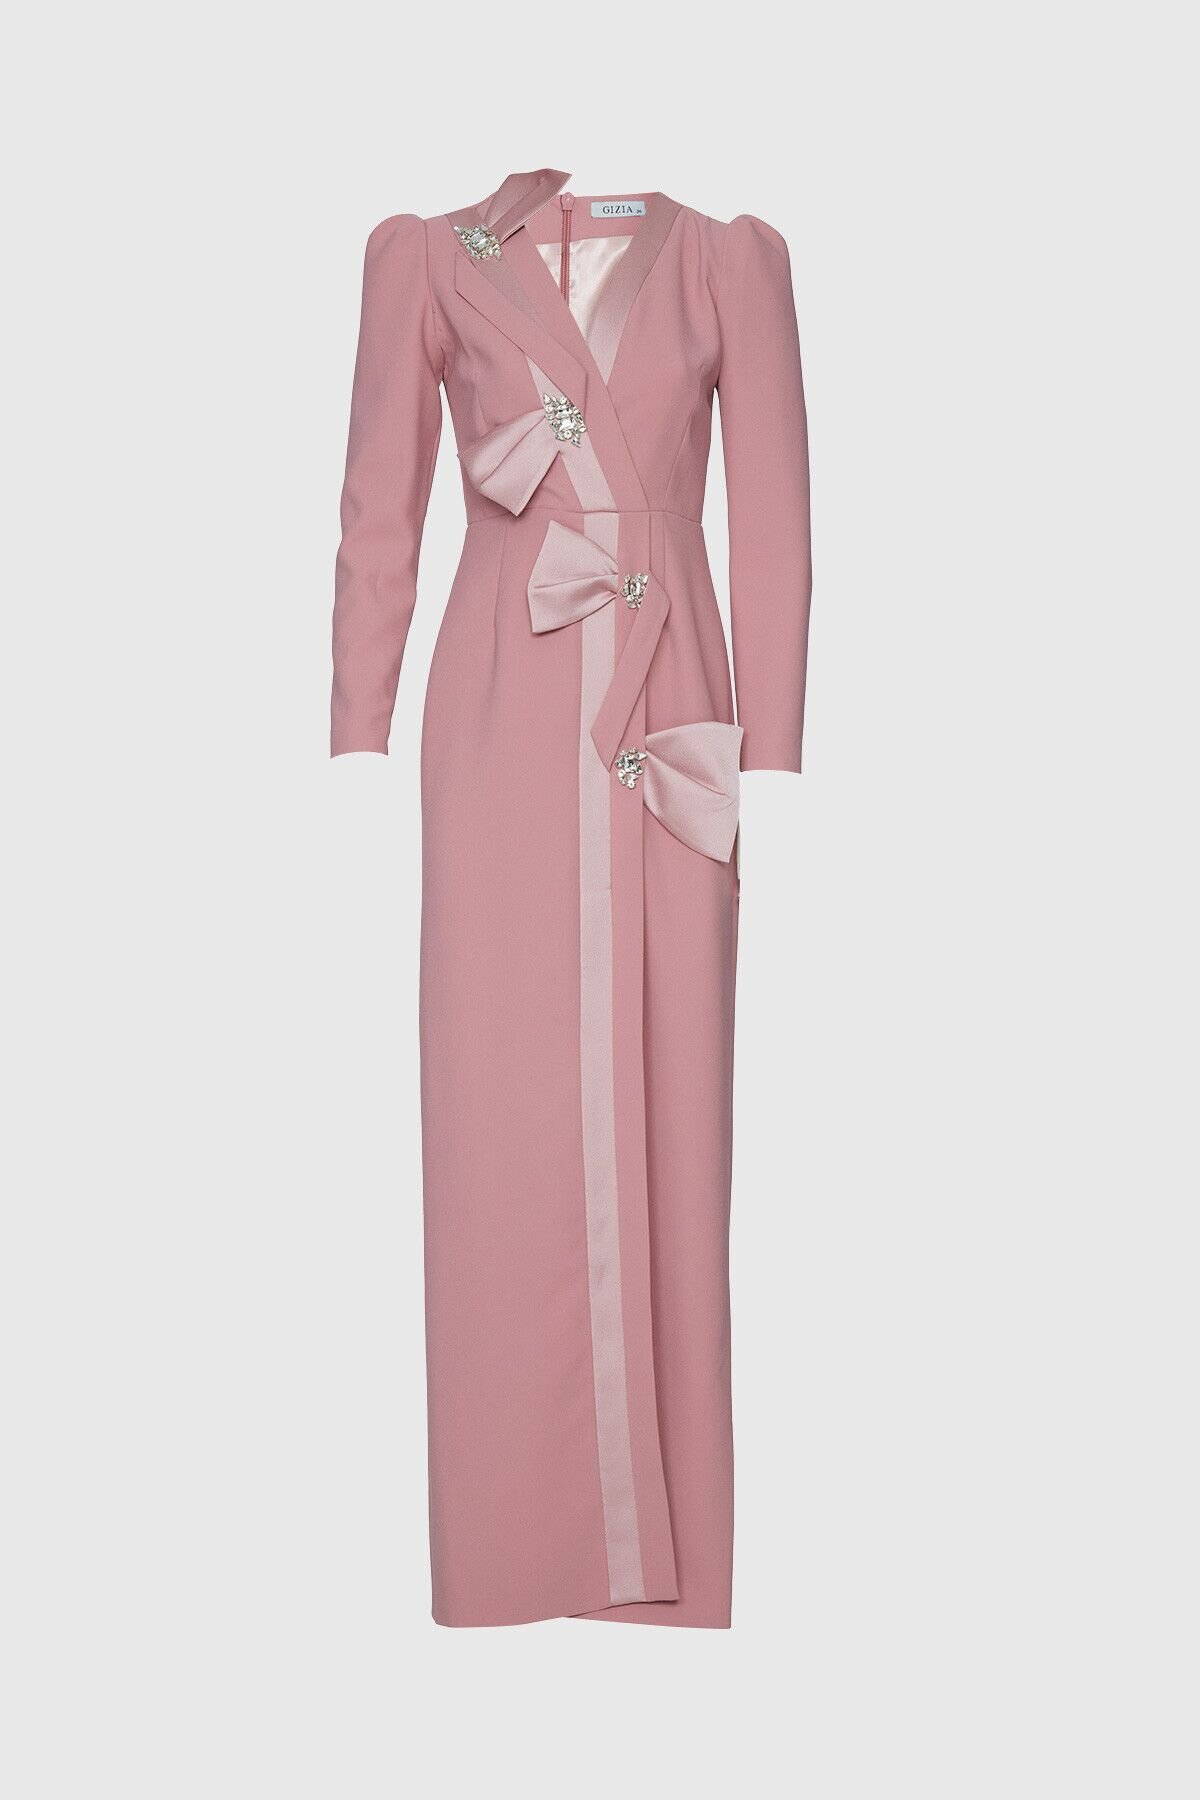 Stone Detailed Long Pink Dress